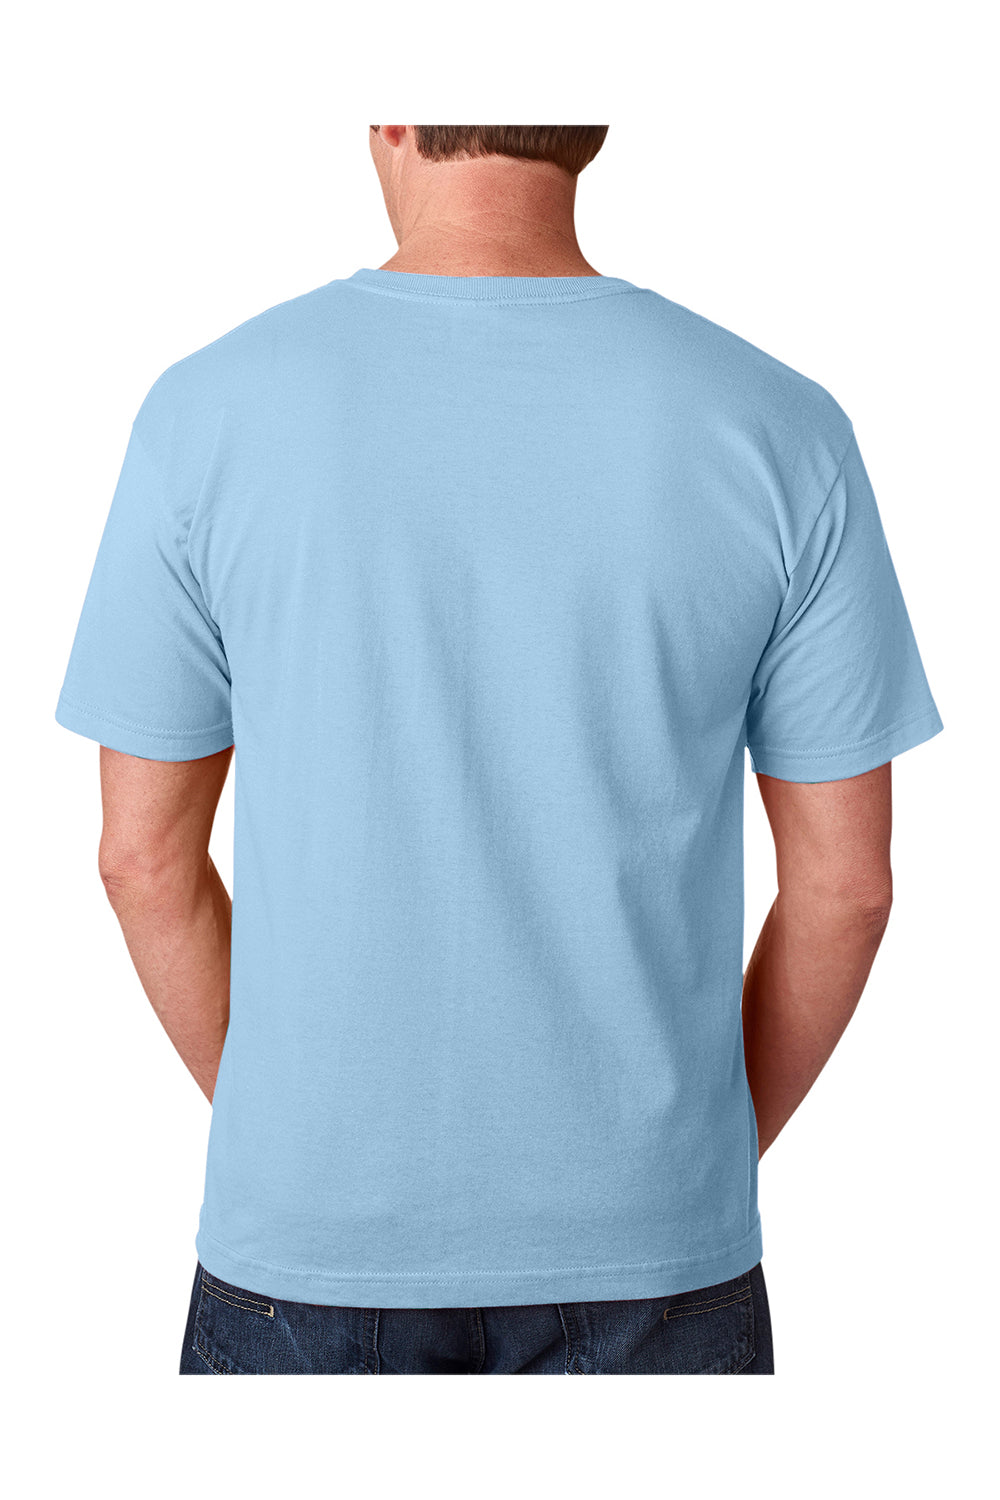 Bayside BA5040 Mens USA Made Short Sleeve Crewneck T-Shirt Light Blue Model Back